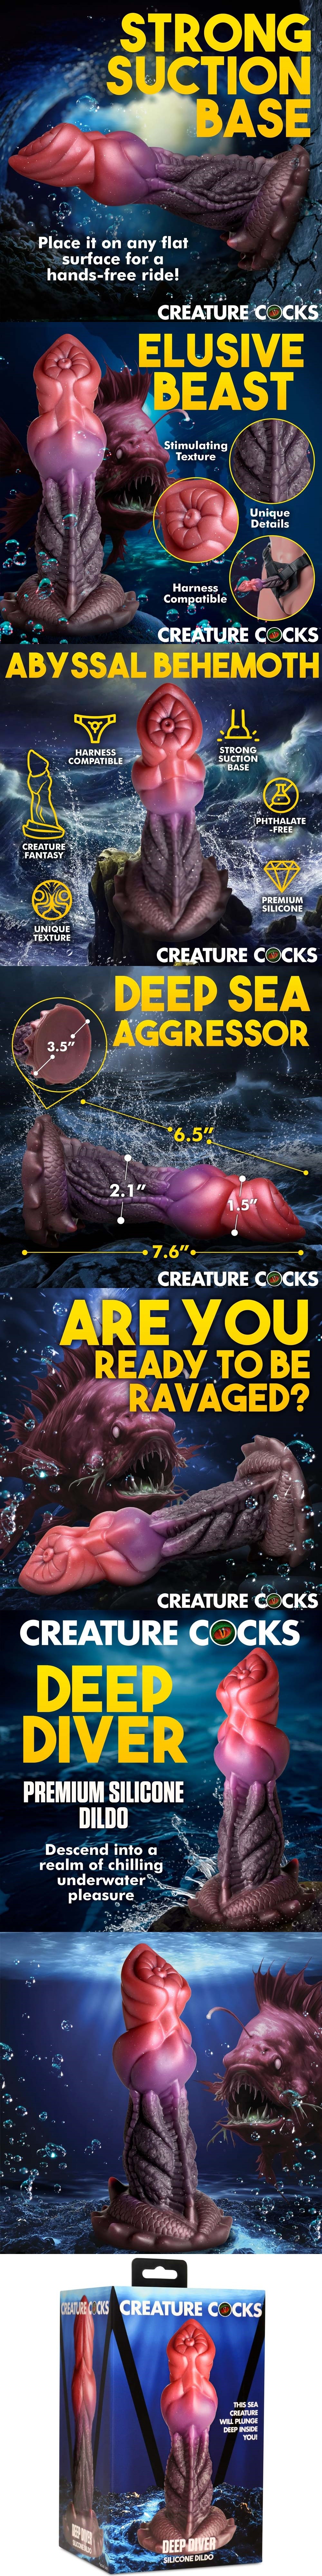 Creature Cocks Deep Diver Silicone Tentacle Dildo